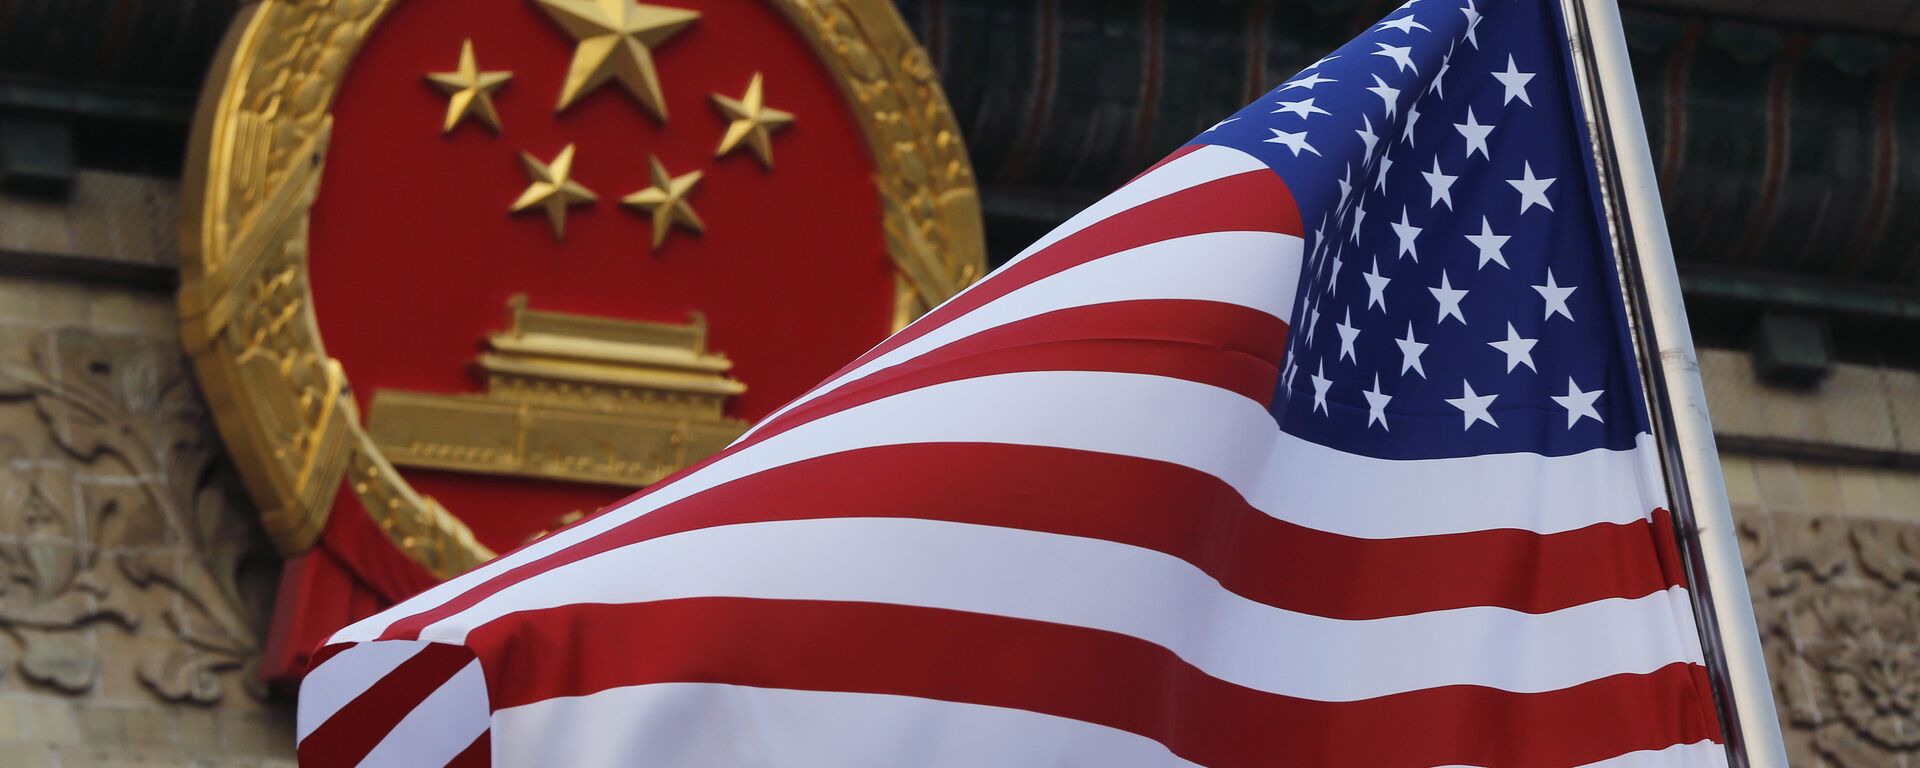 La bandera de EEUU y el emblema de China  - Sputnik Mundo, 1920, 09.03.2021